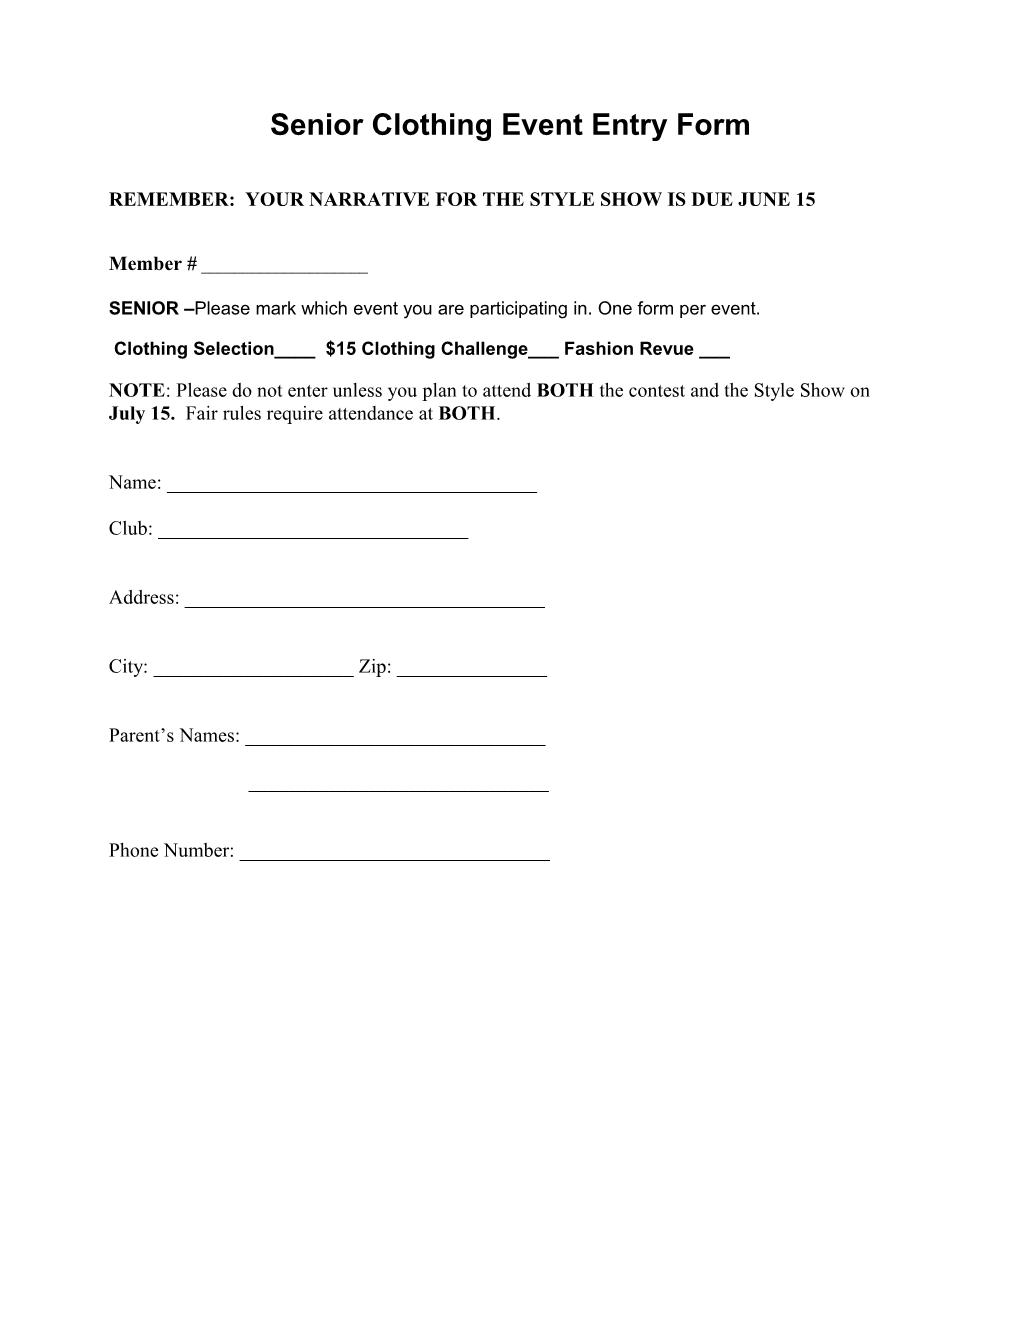 Senior Clothing Event Entry Form